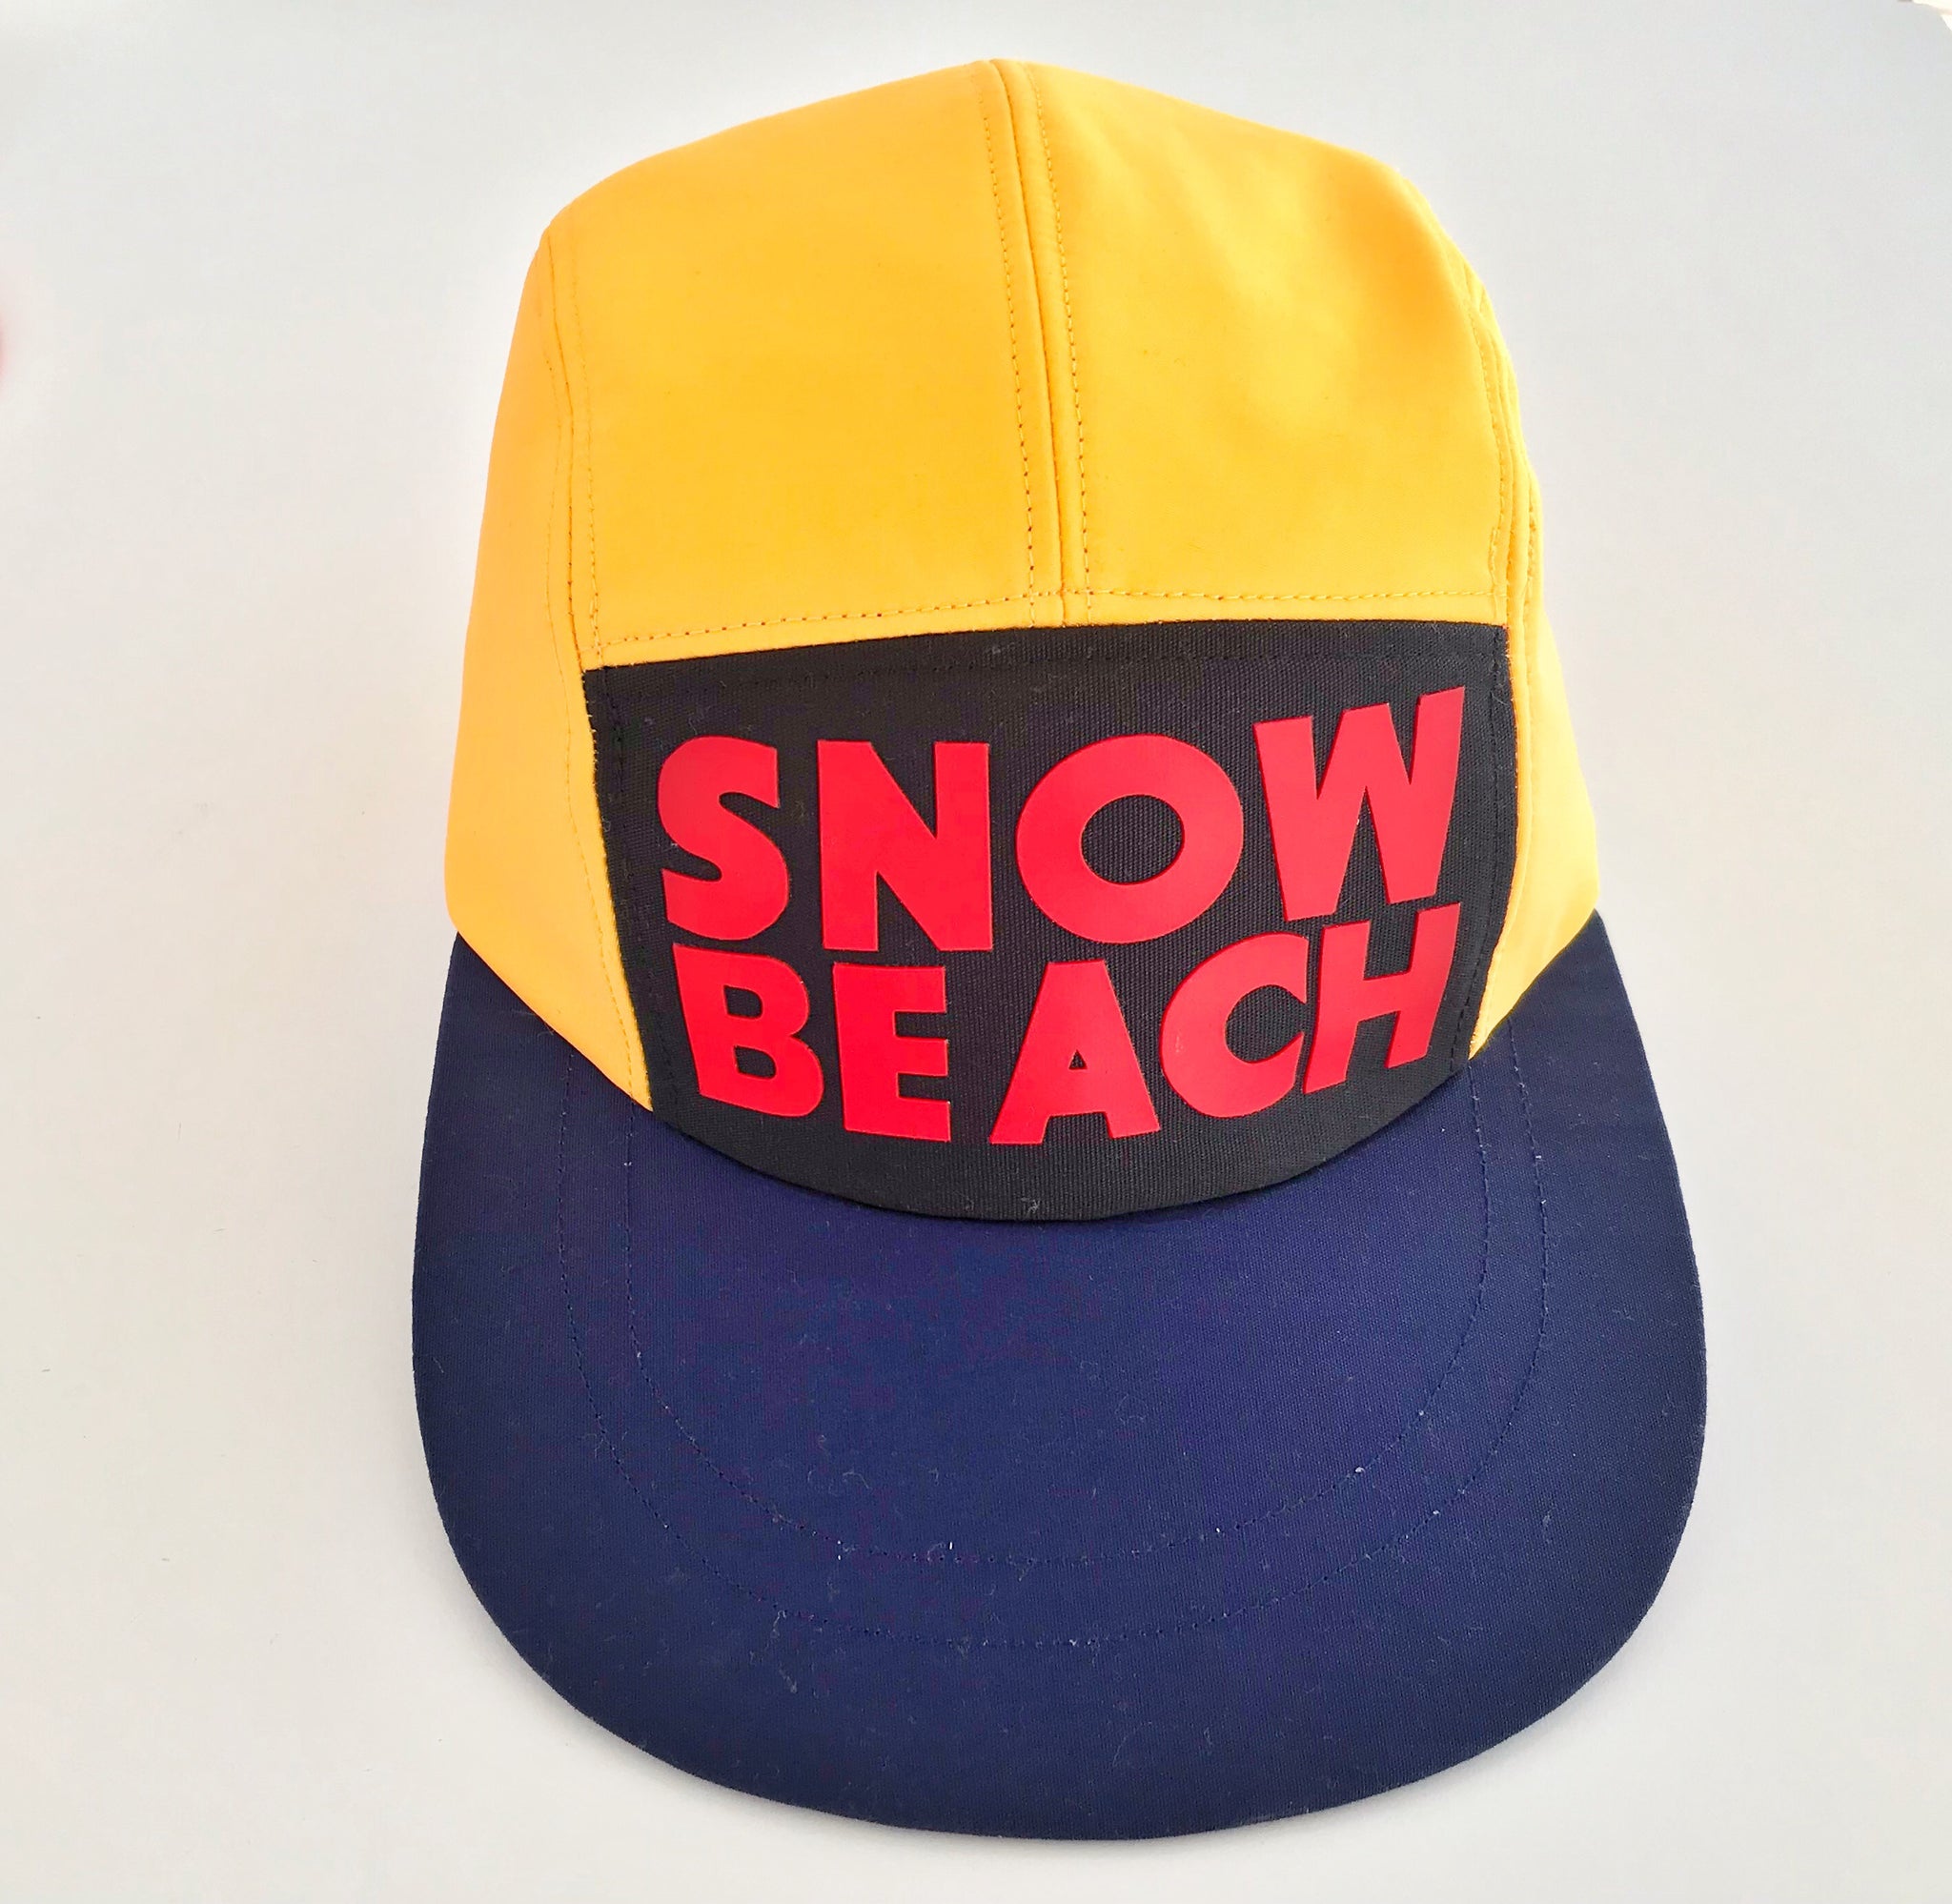 snow beach cap